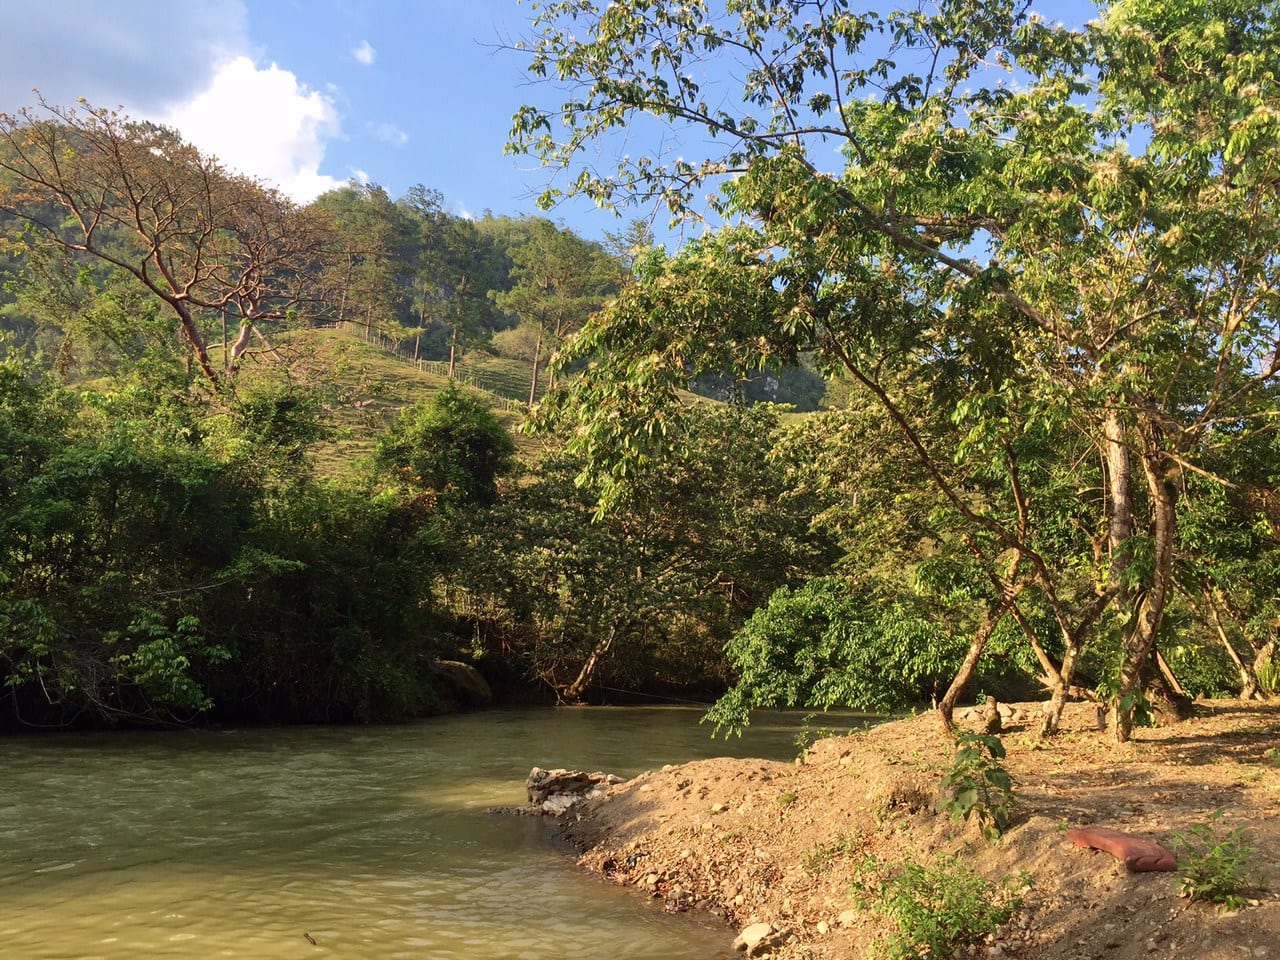 The calm river and bank near El Retiro Lodge in Guatemala